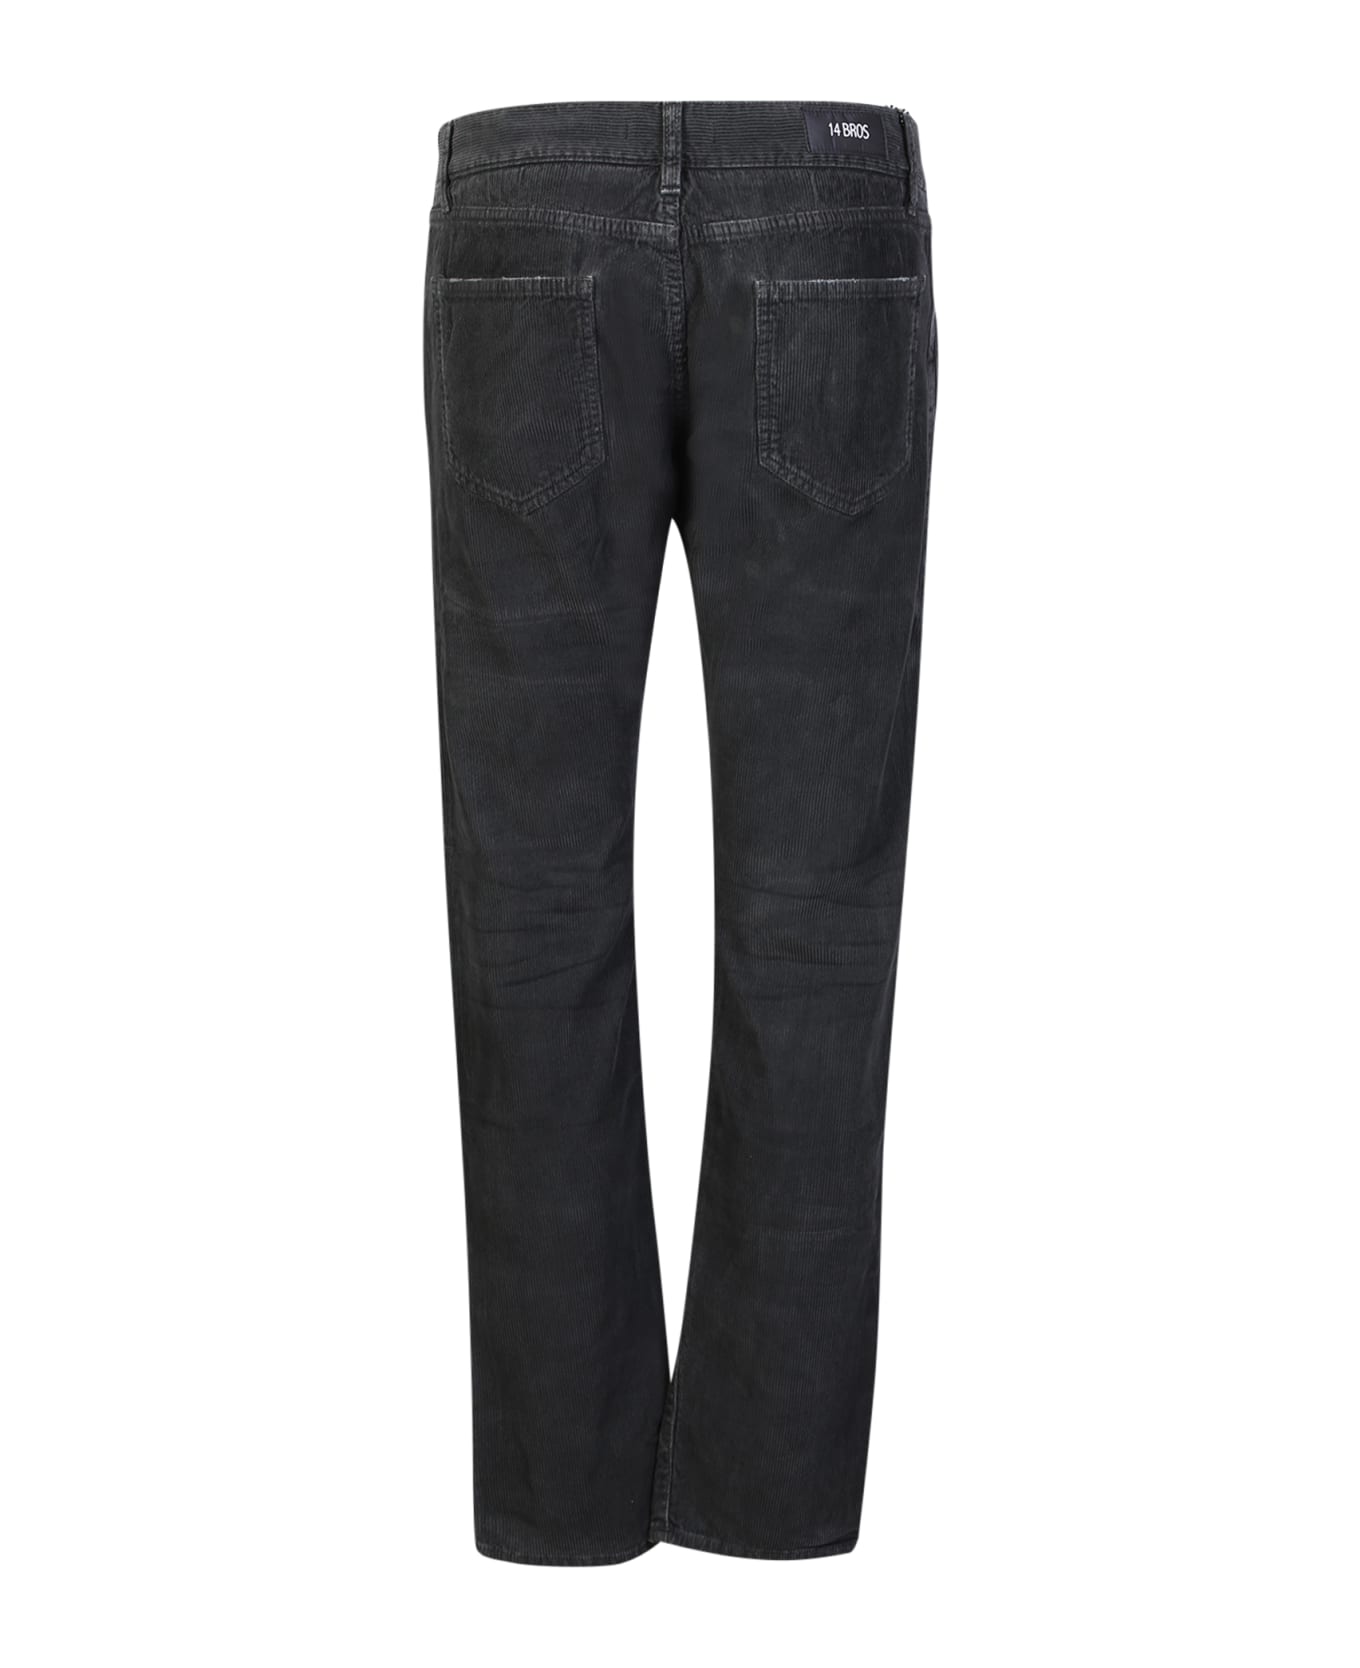 14 Bros Cheswick Corduroy Jeans In Black - Black